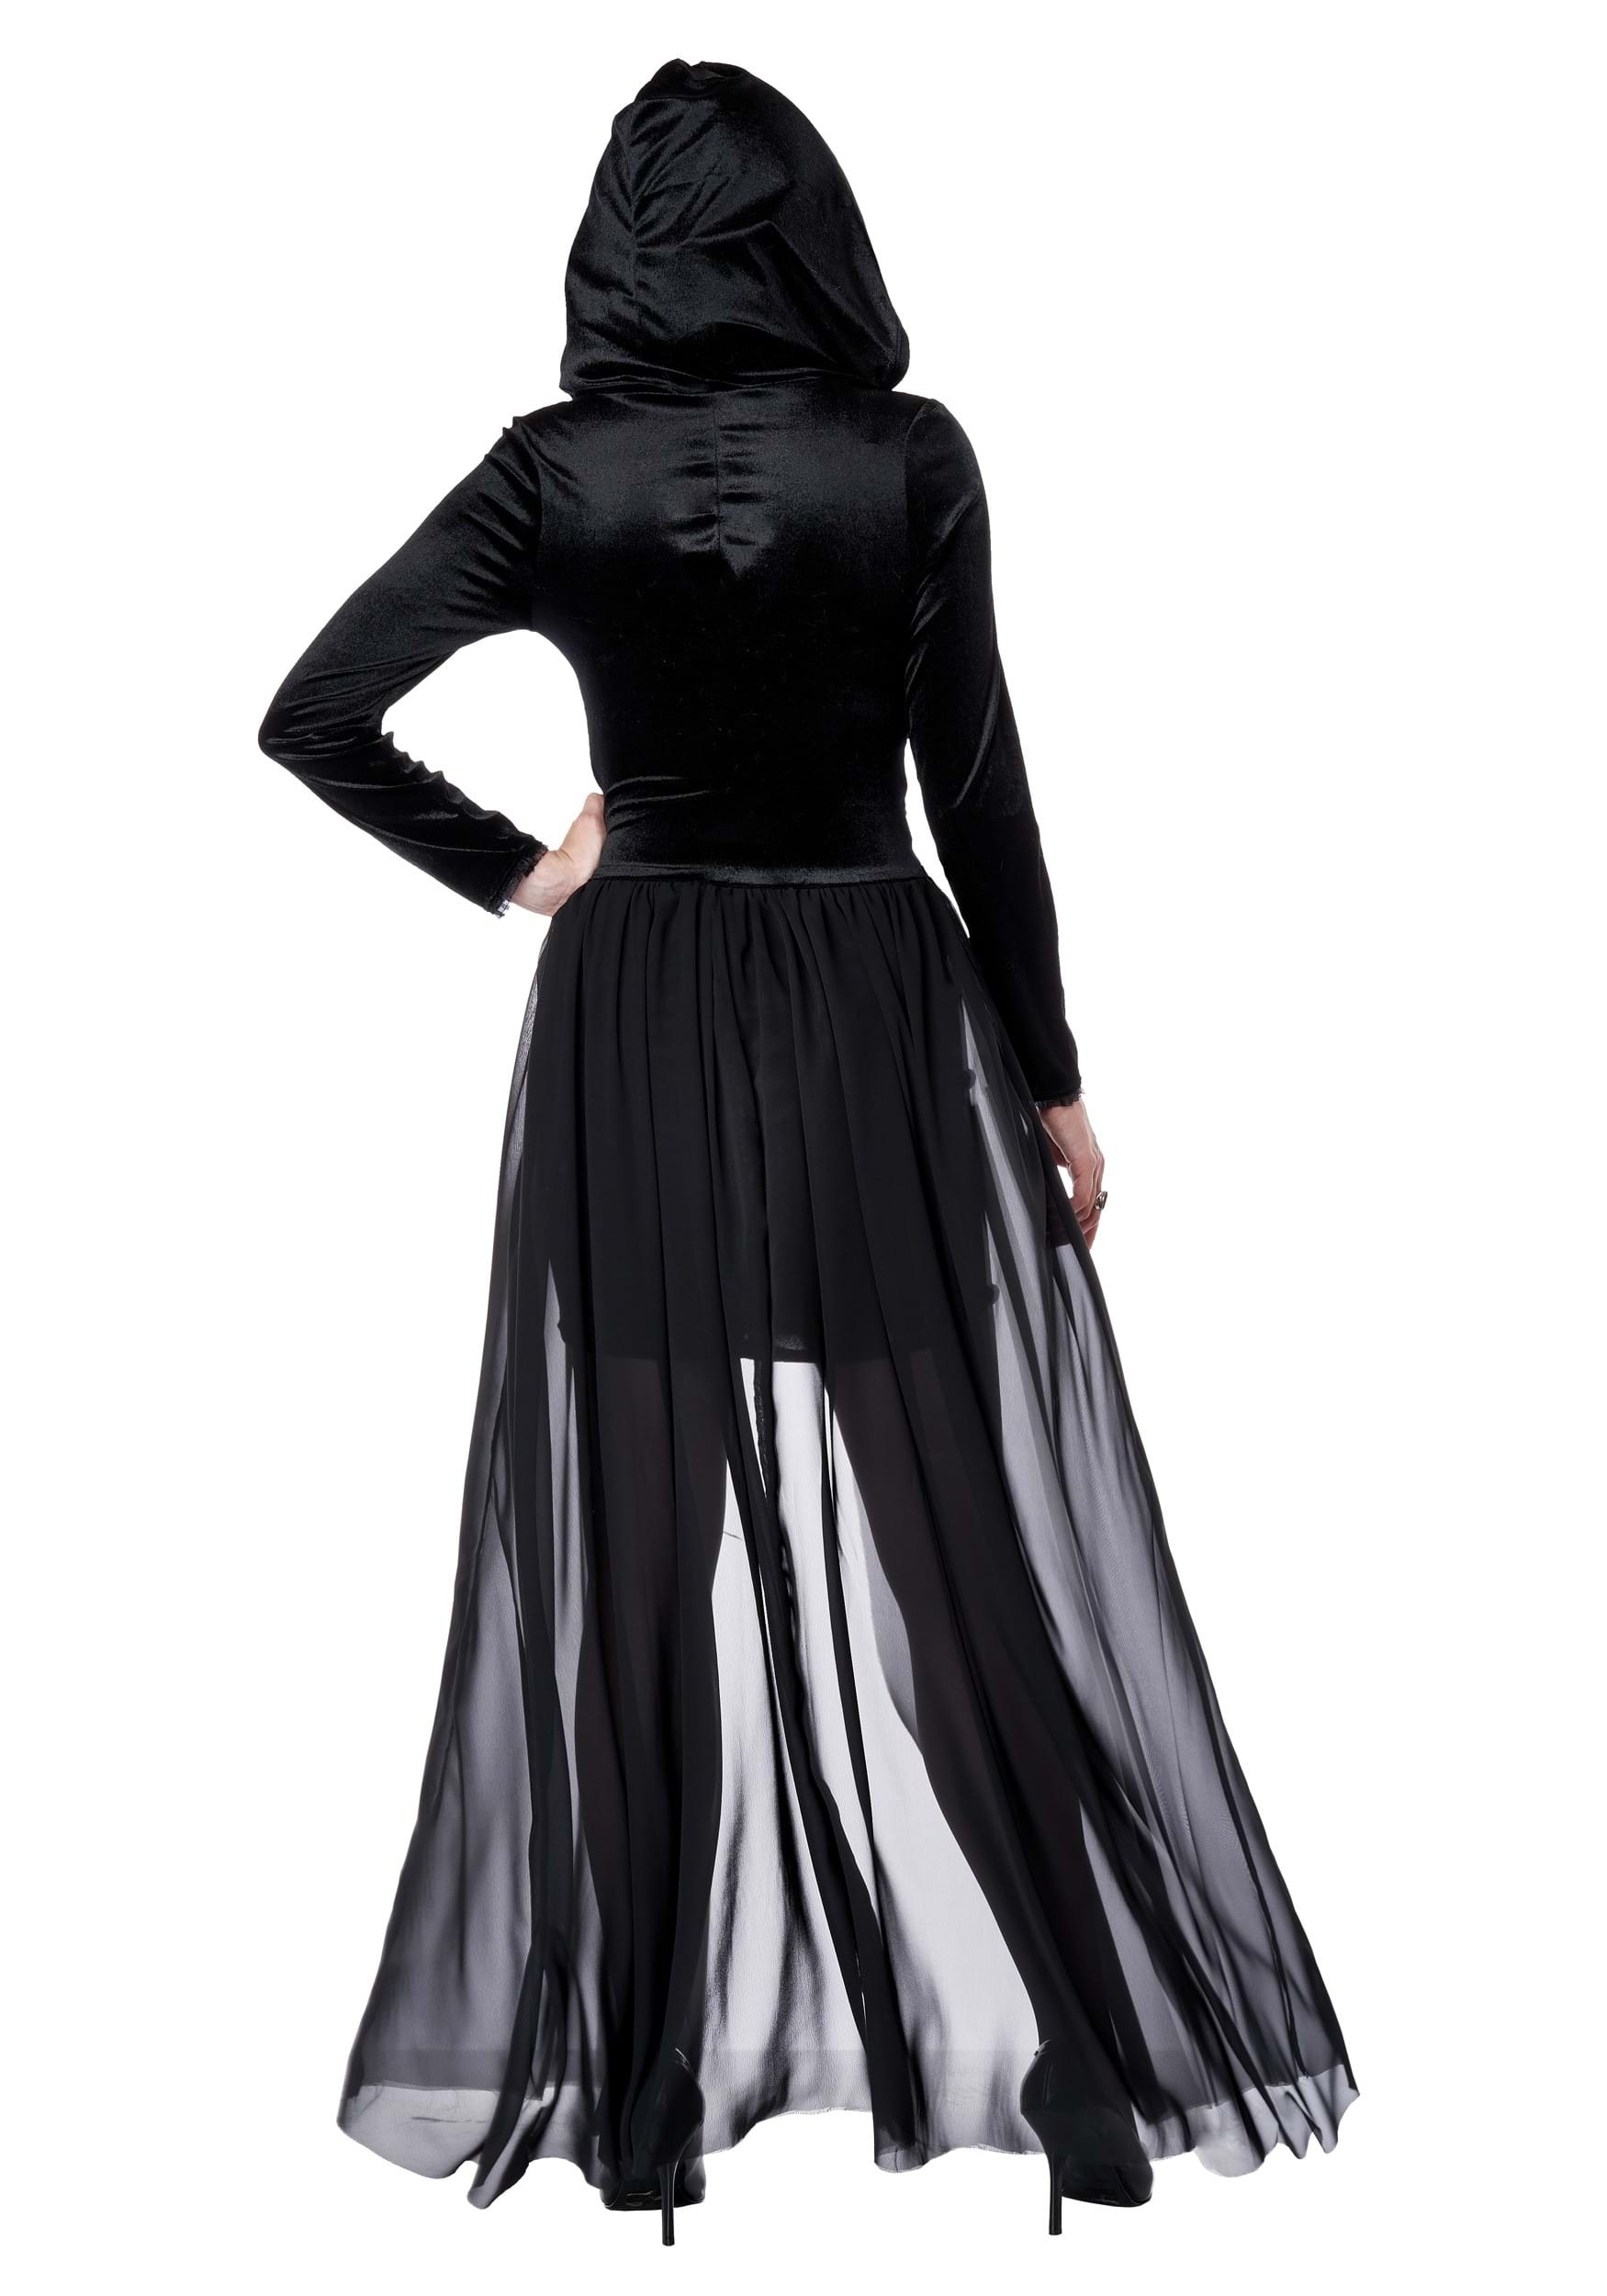 Women's Gothic Hooded Dress Costume